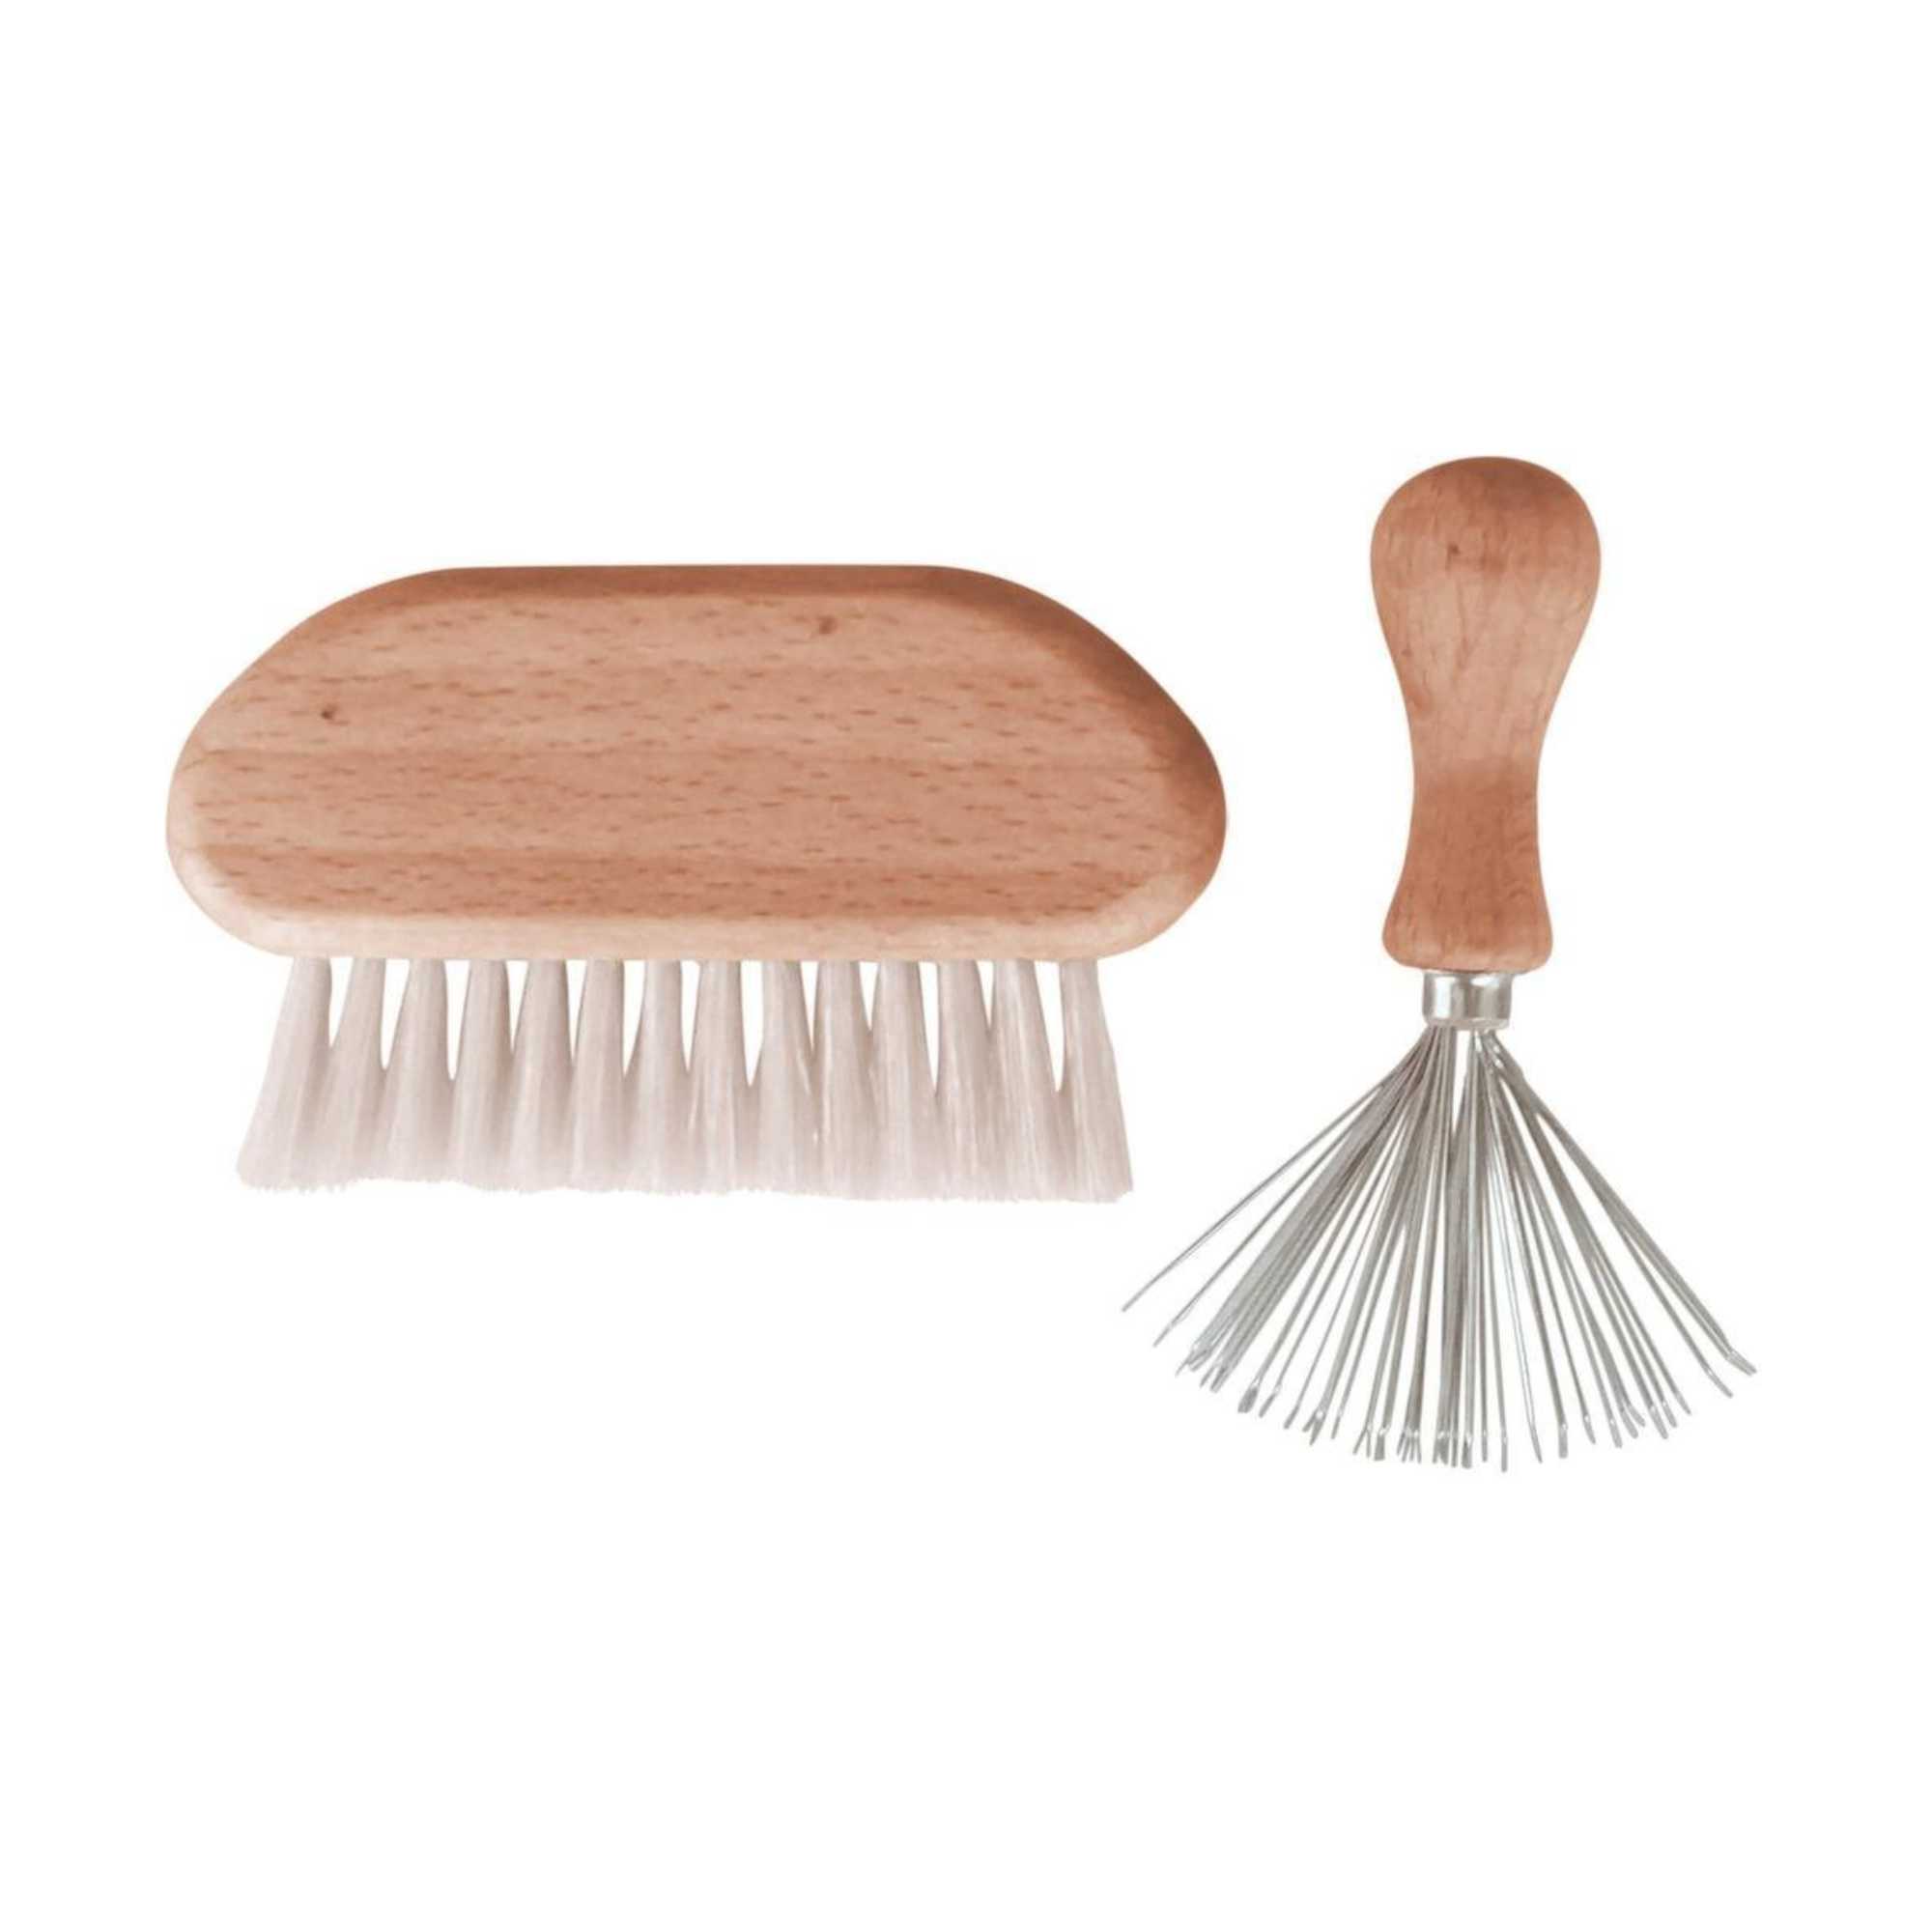 Redecker Hairbrush Cleaning Set